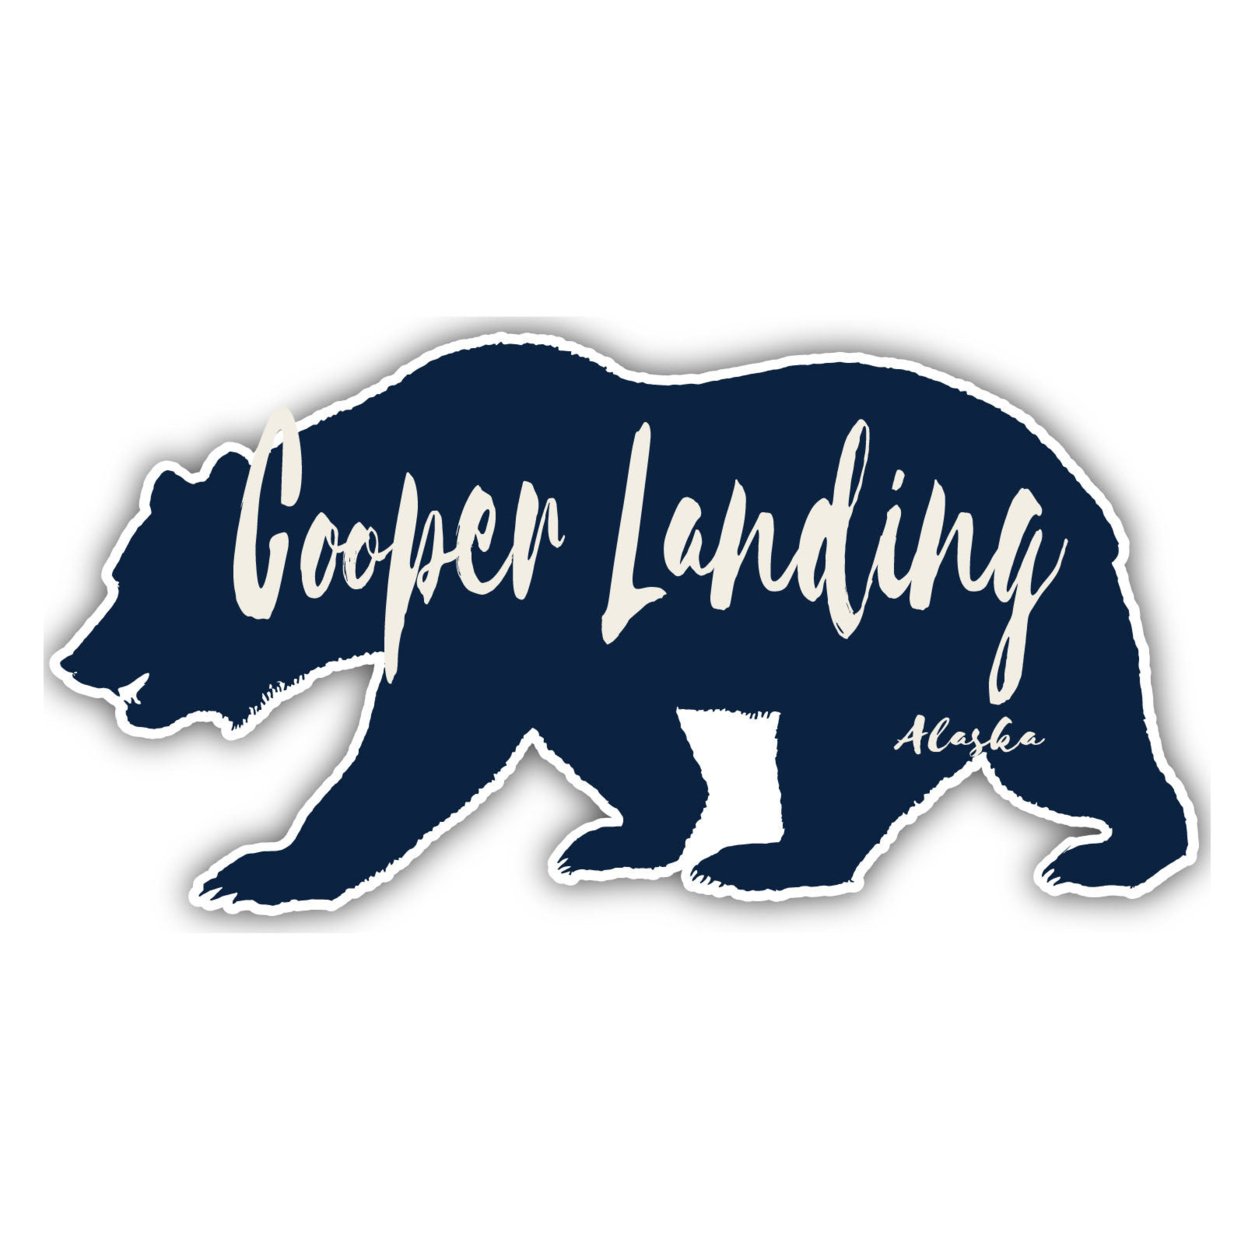 Cooper Landing Alaska Souvenir Decorative Stickers (Choose Theme And Size) - 4-Pack, 4-Inch, Tent